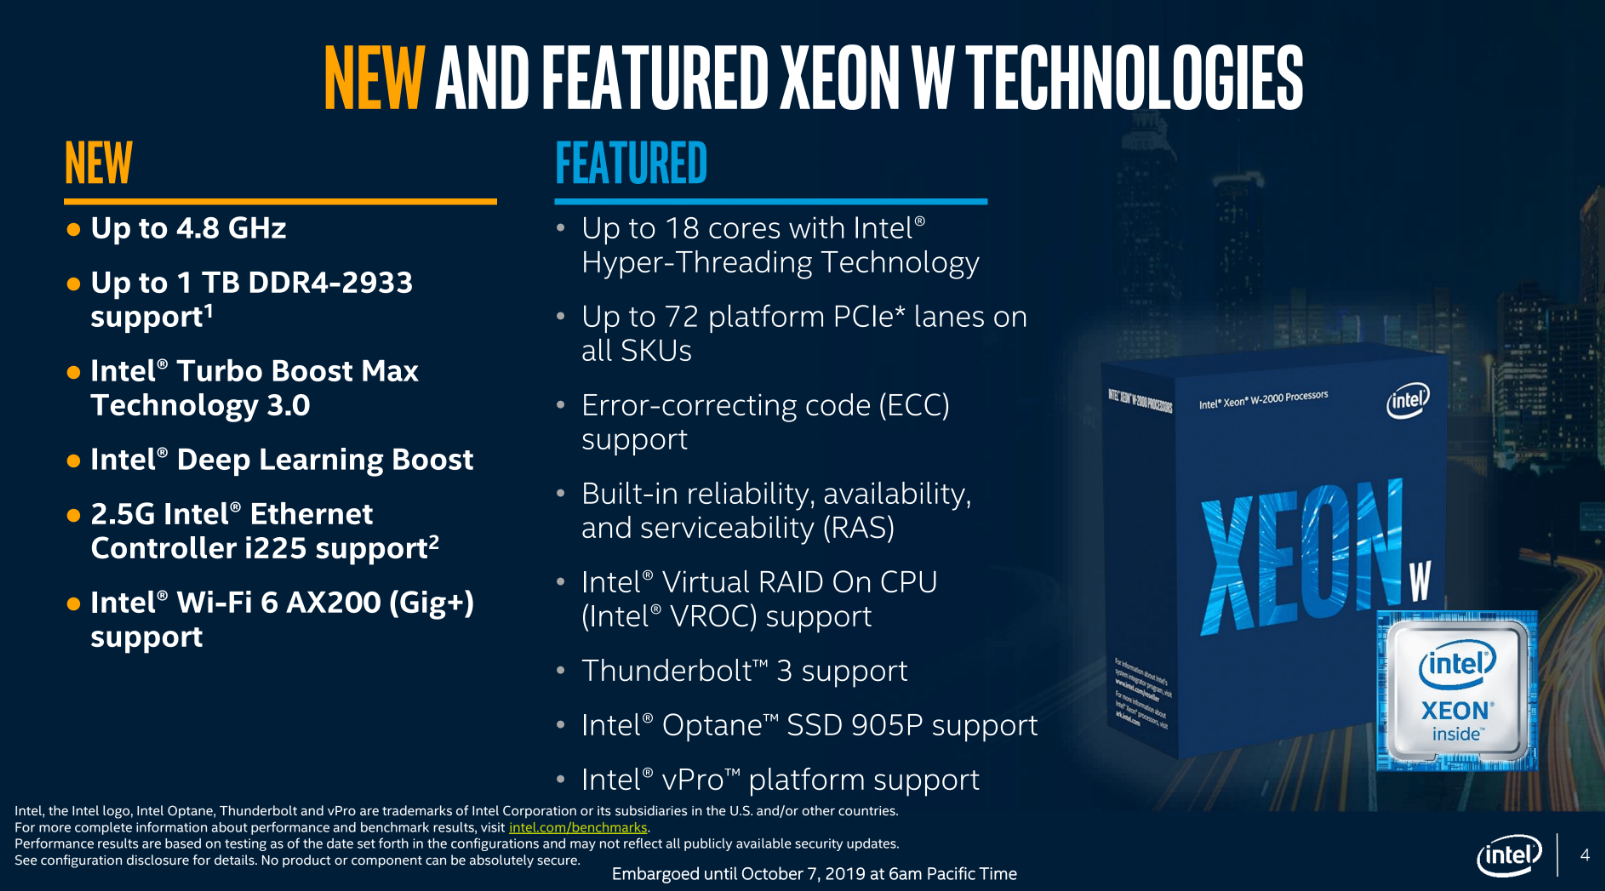 Intel Xeon W 2200 Series Platform Capabilities